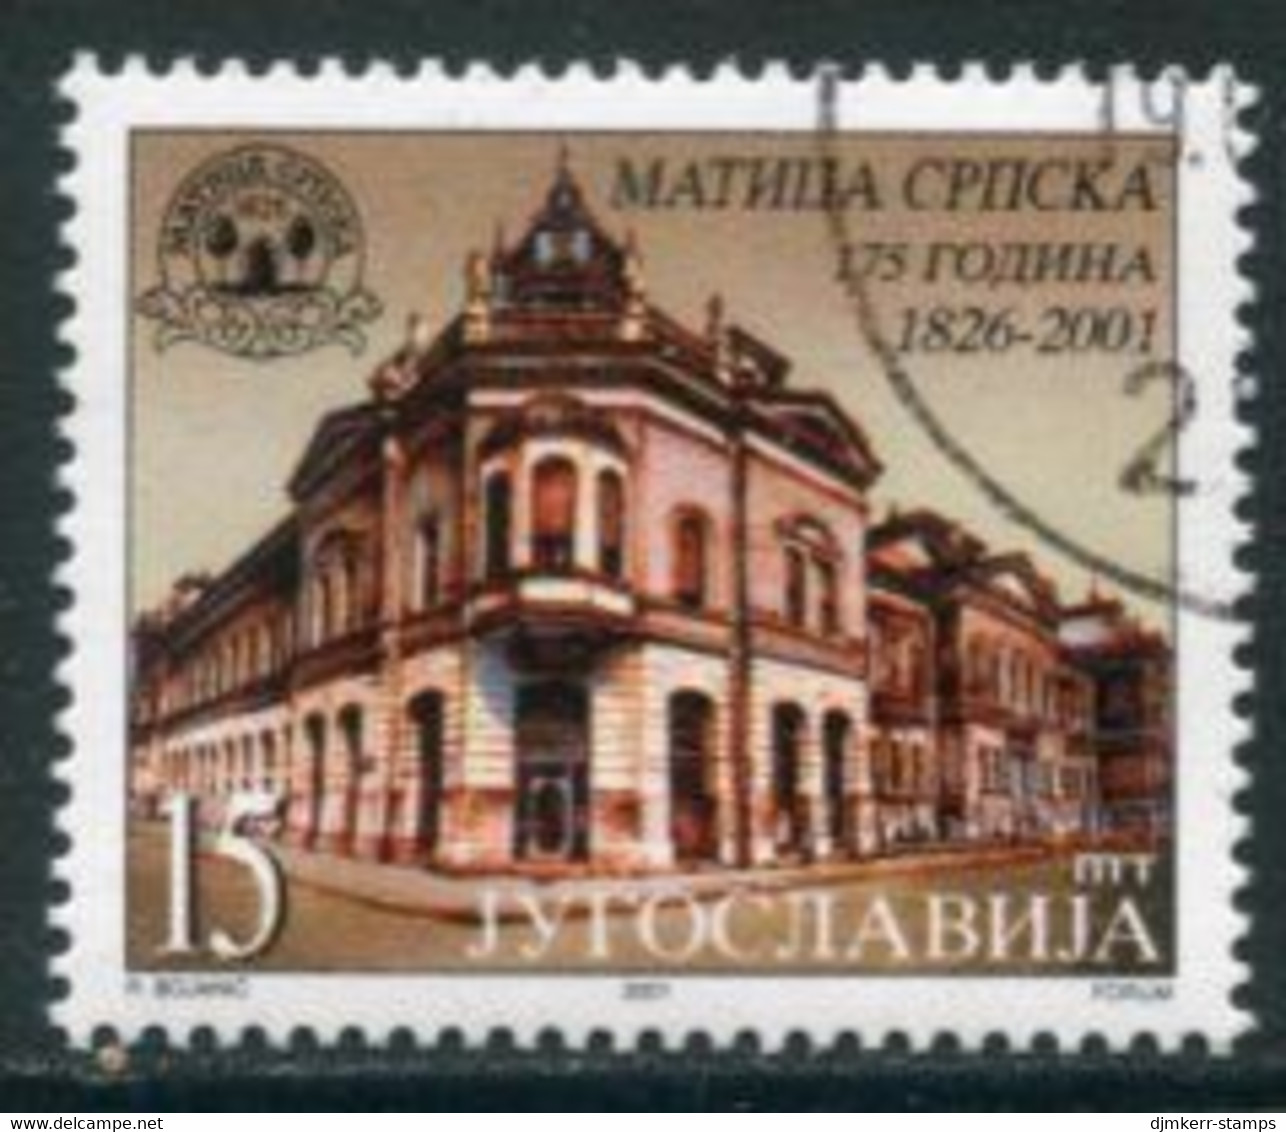 YUGOSLAVIA 2001 Matica Srpska Literary Association Used.  Michel 3012 - Used Stamps